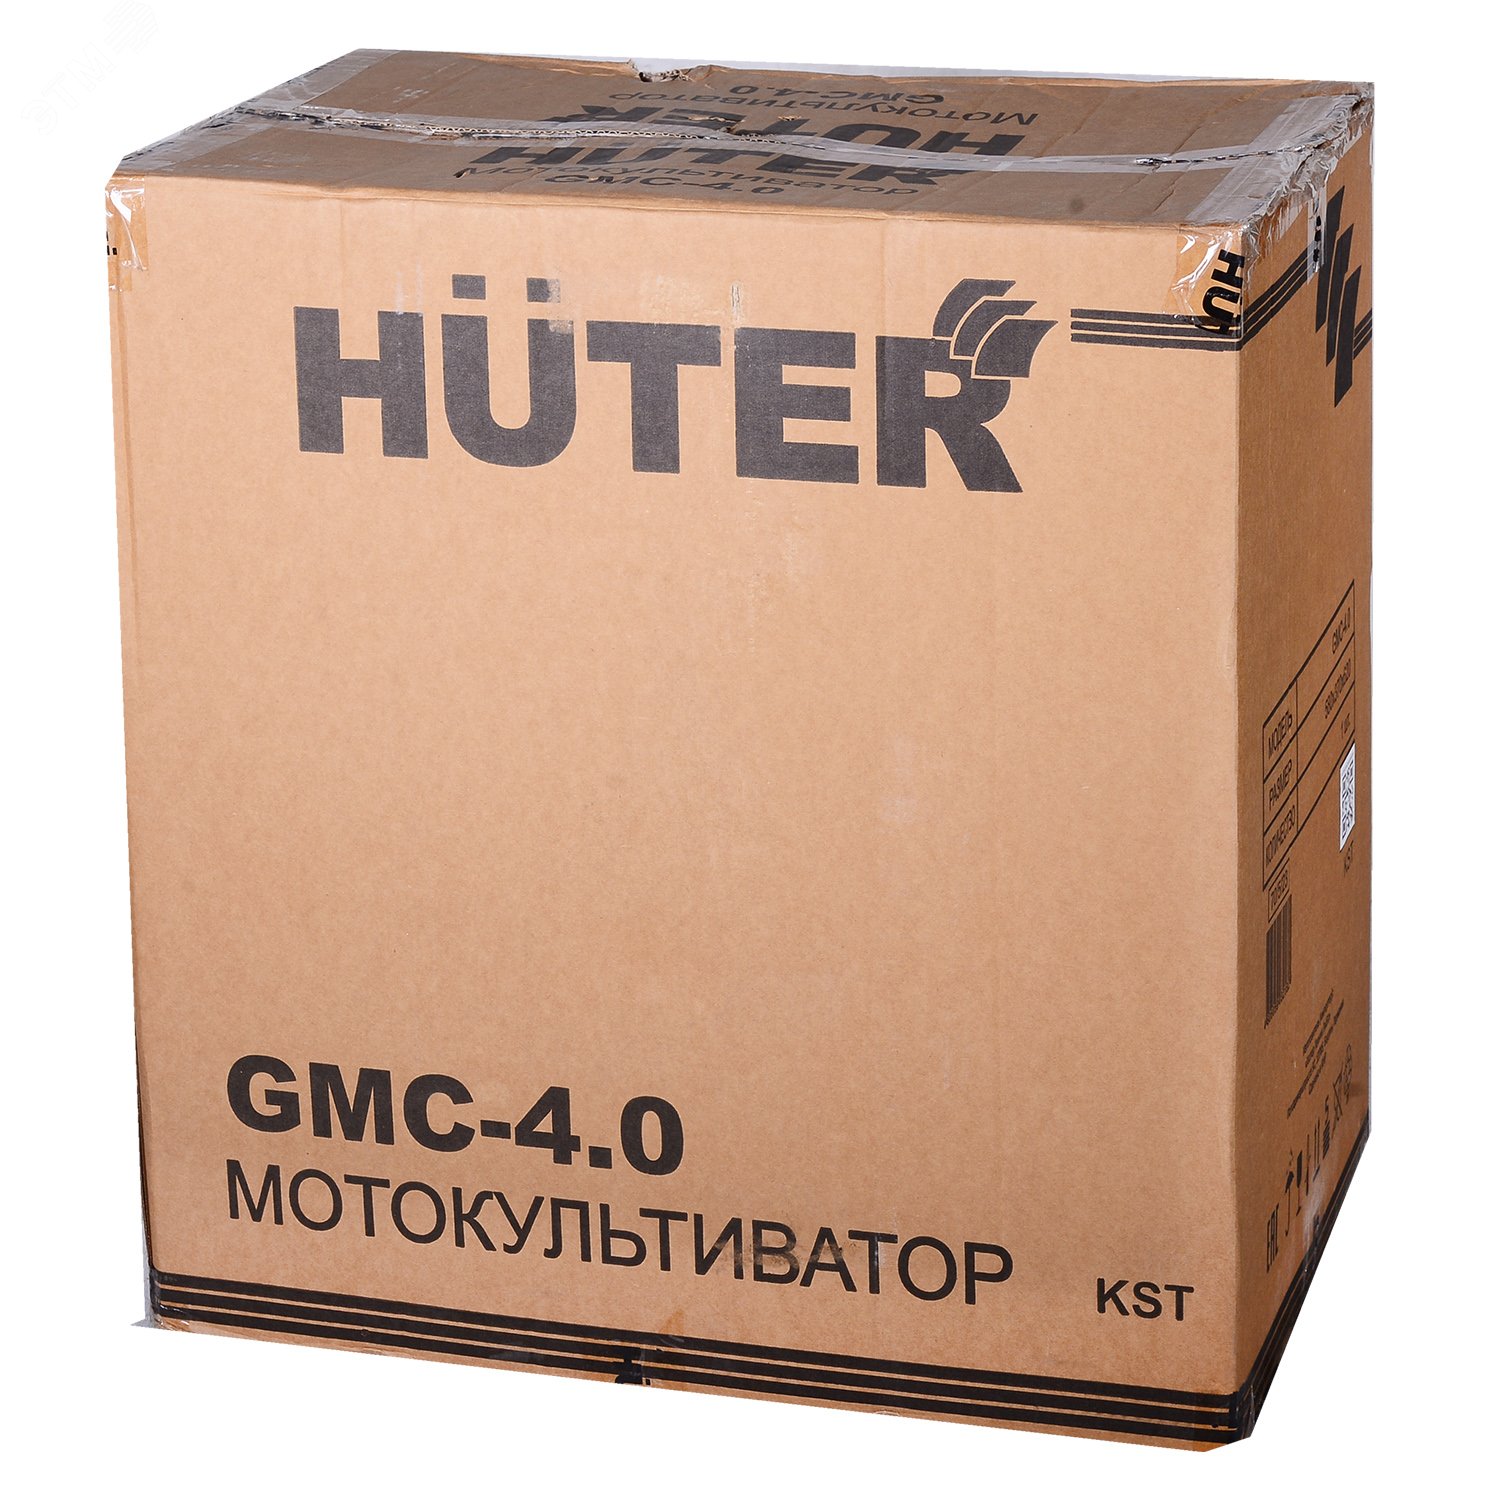 Мотокультиватор GMC-4.0 70/5/23 Huter - превью 8